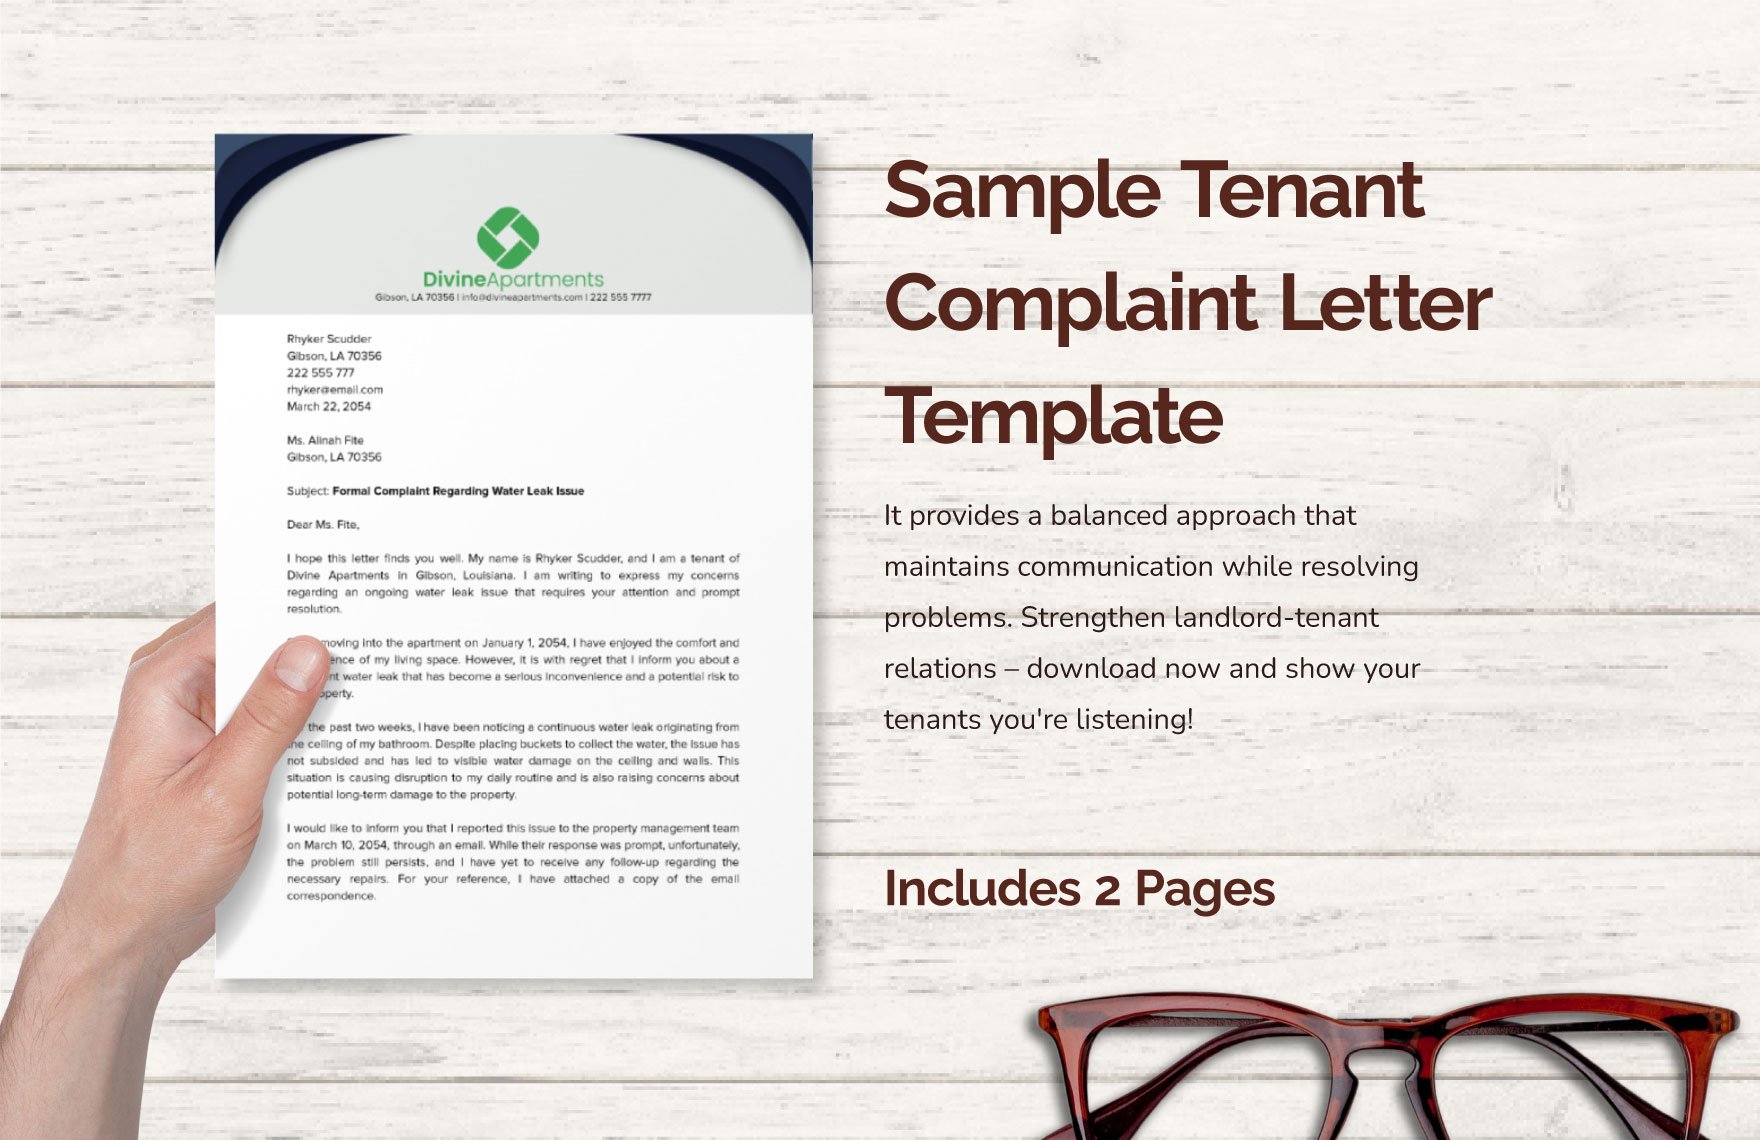 Sample Tenant Complaint Letter Template